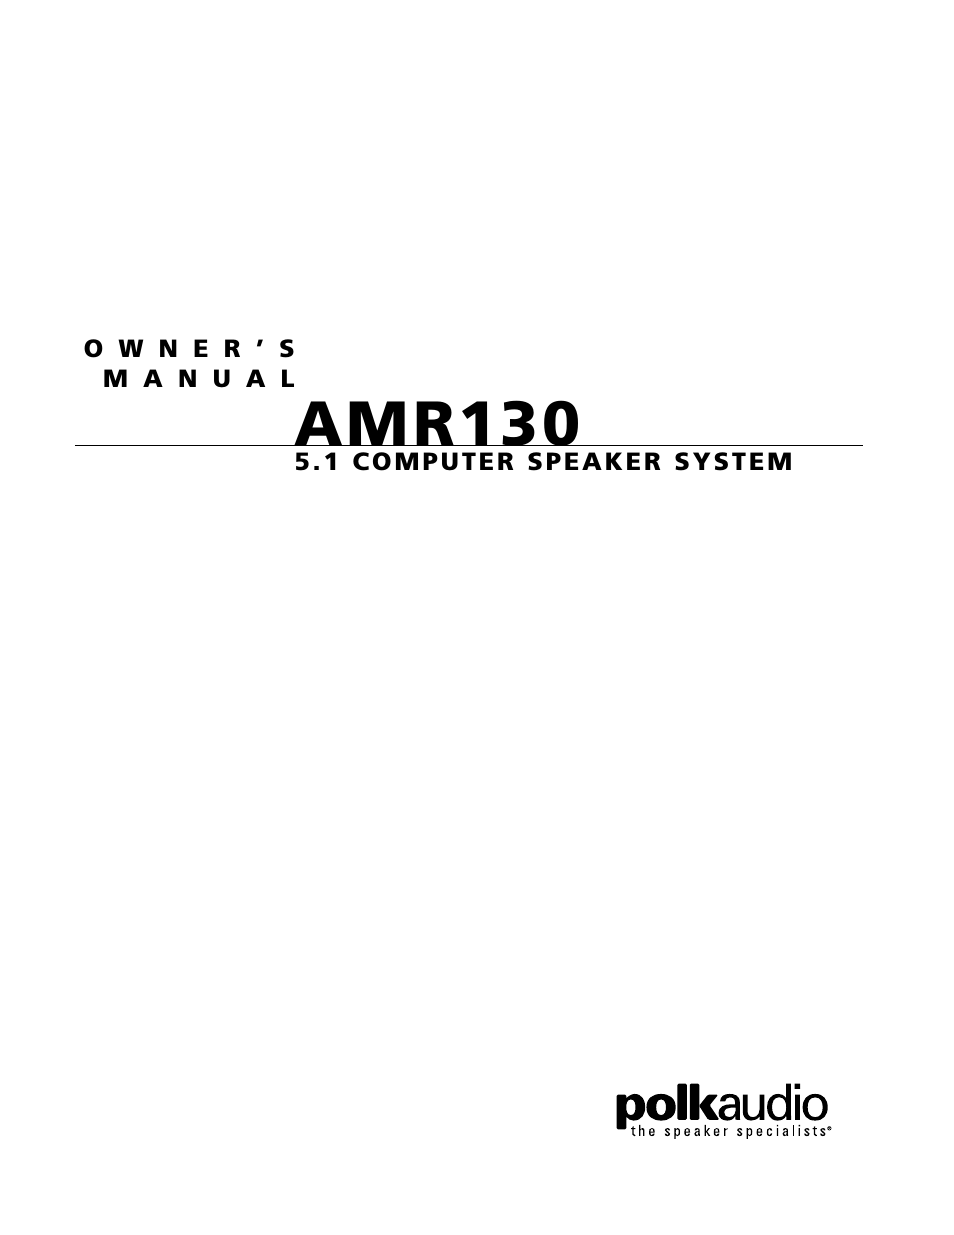 AMR 130